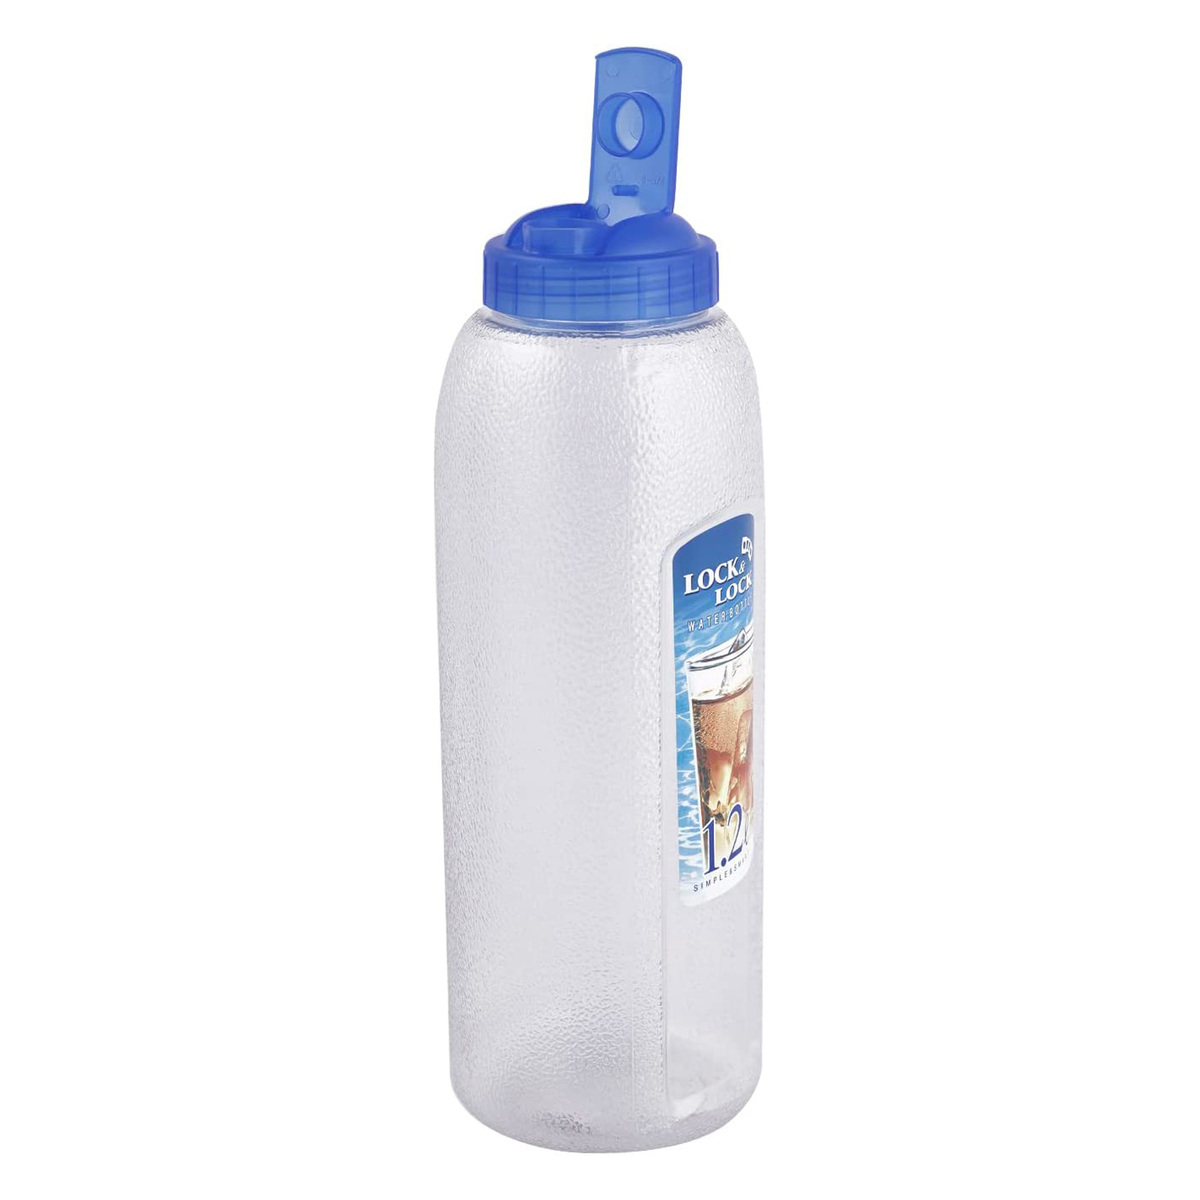 Lock & Lock Aqua Water Bottle, 1.2 L, Clear, HAP730